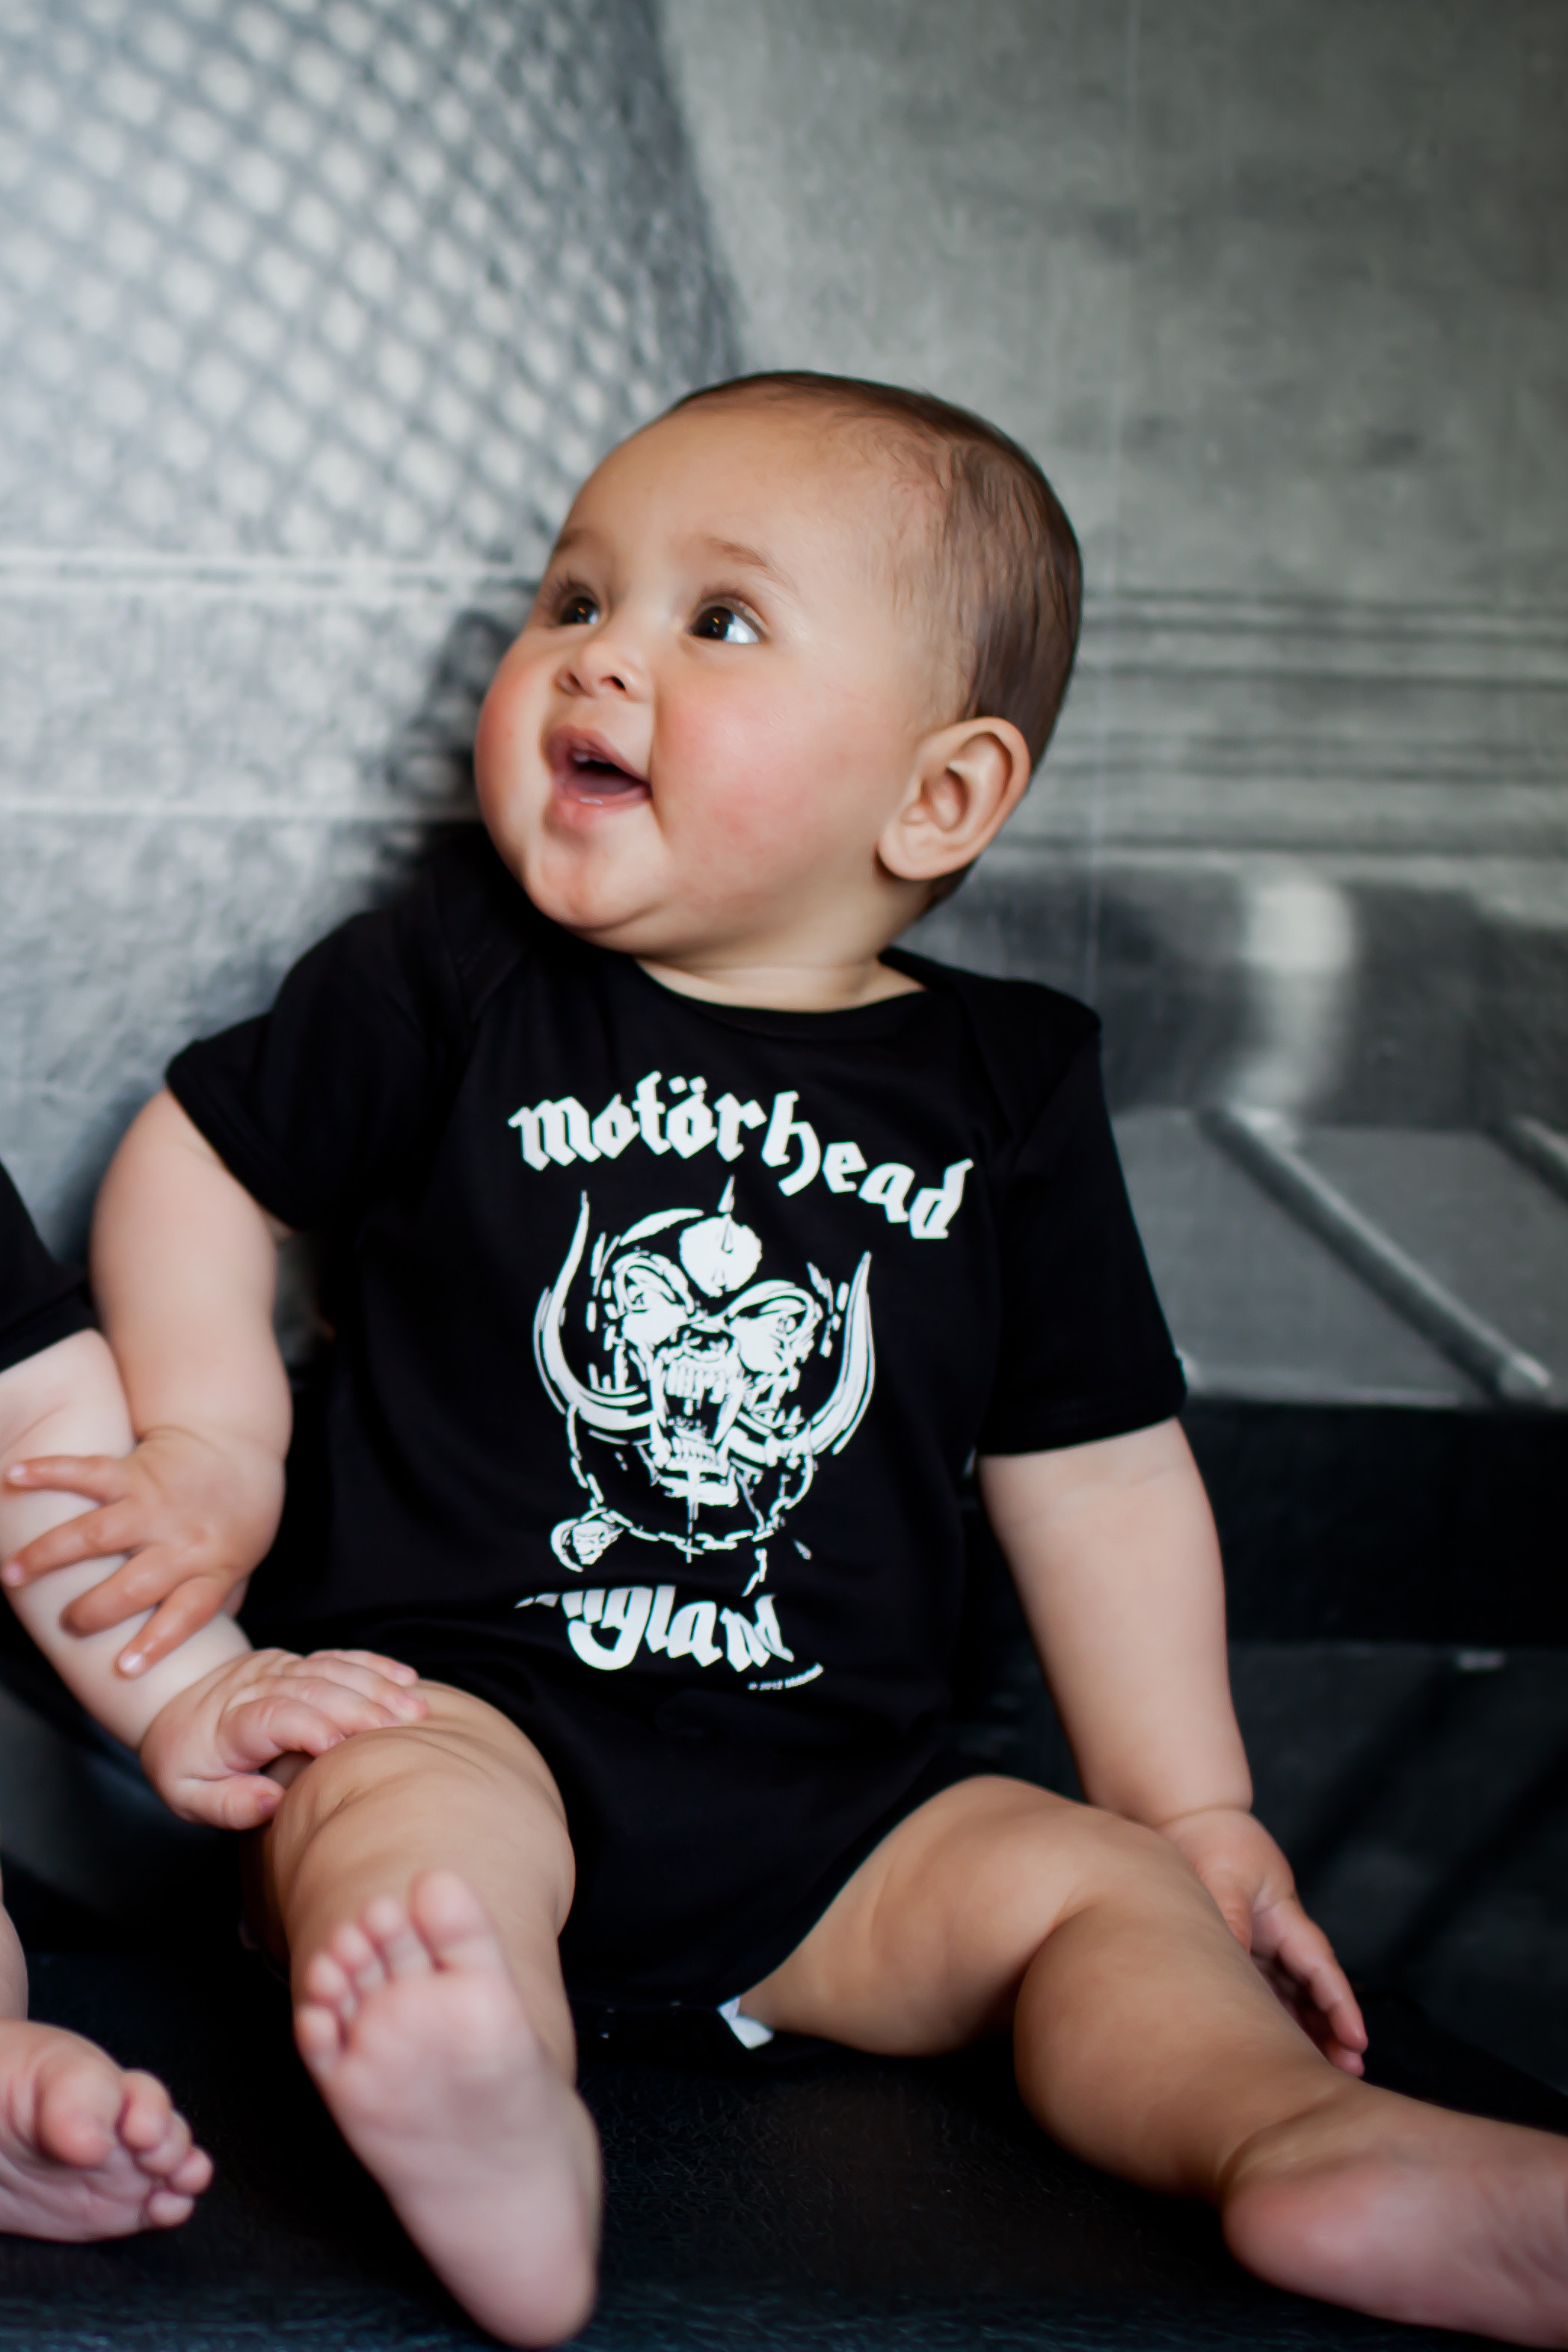 Motorhead baby onesies for little rockers